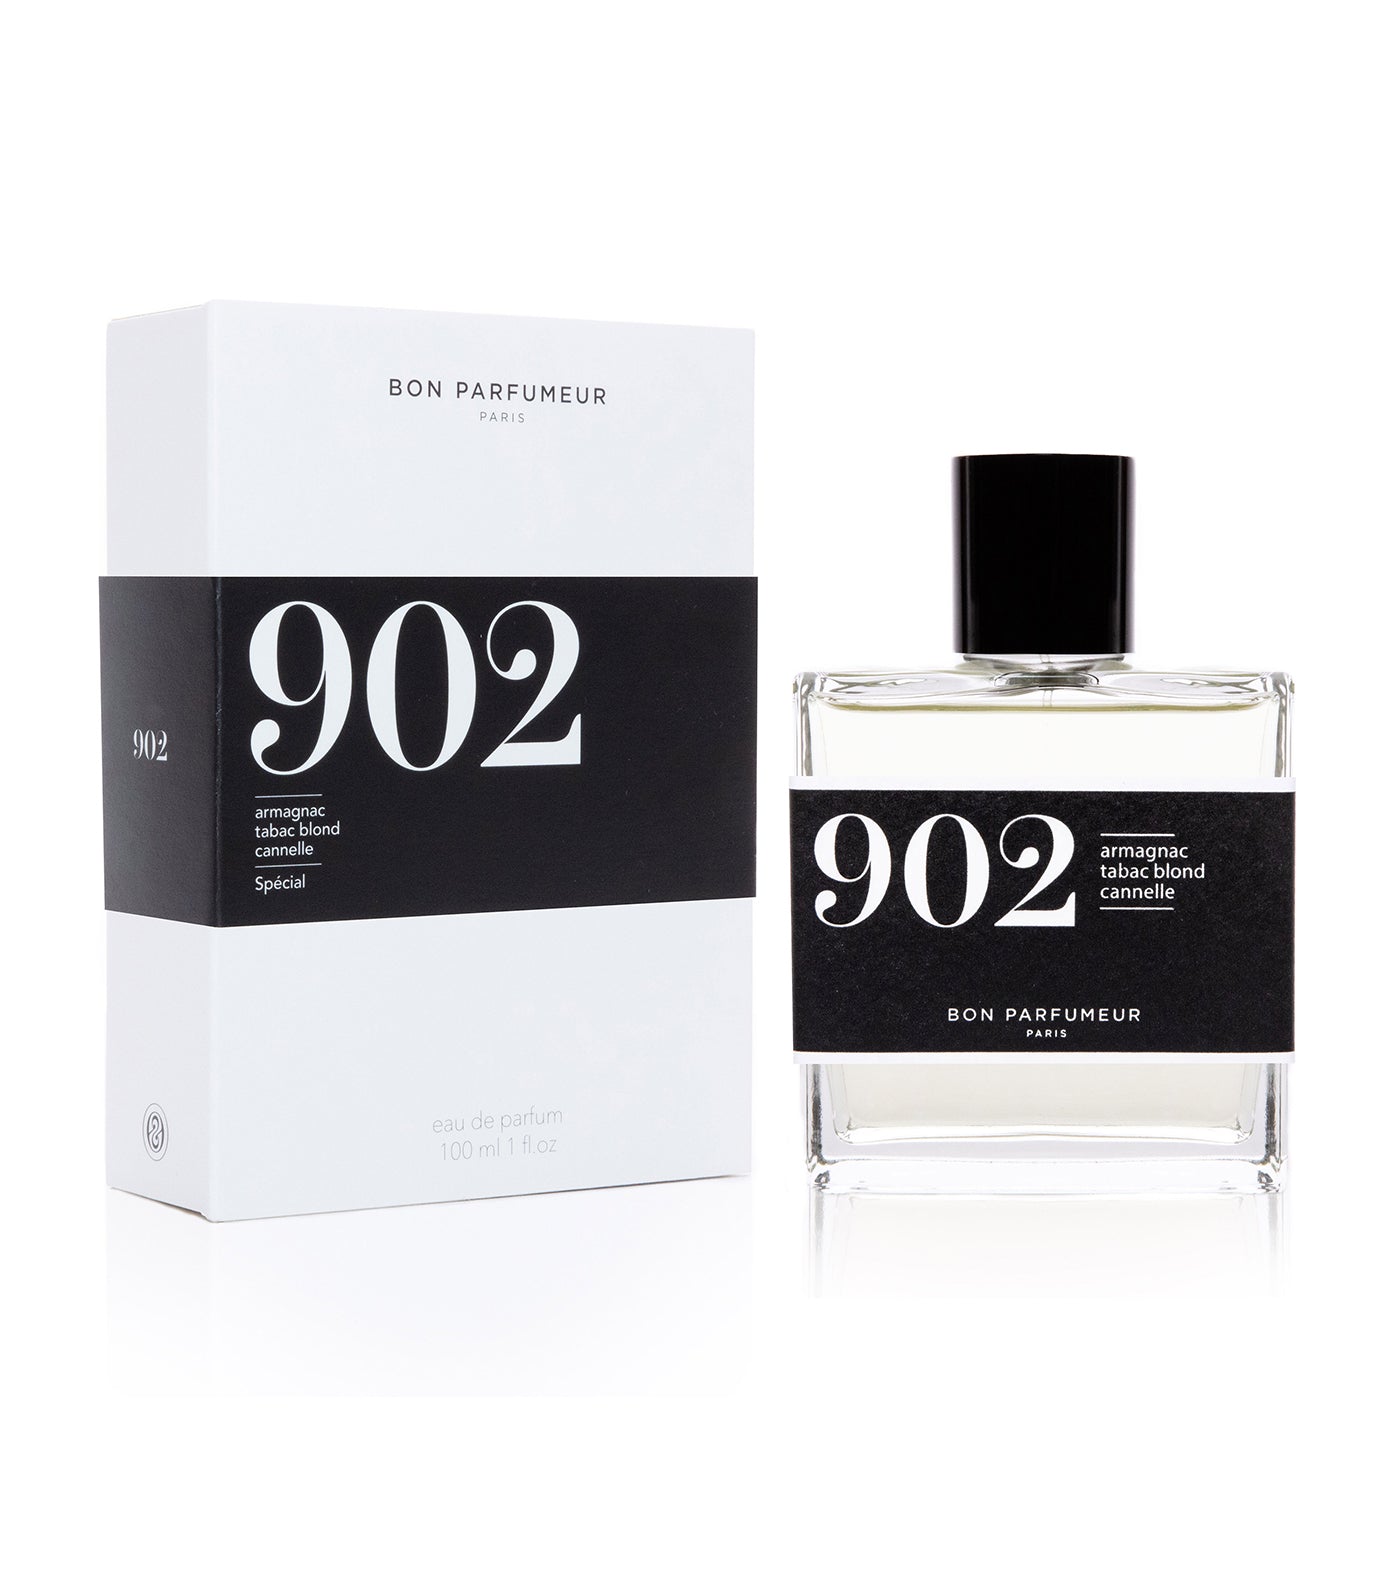 Eau de parfum 902 : armagnac, blond tobacco and cinnamon